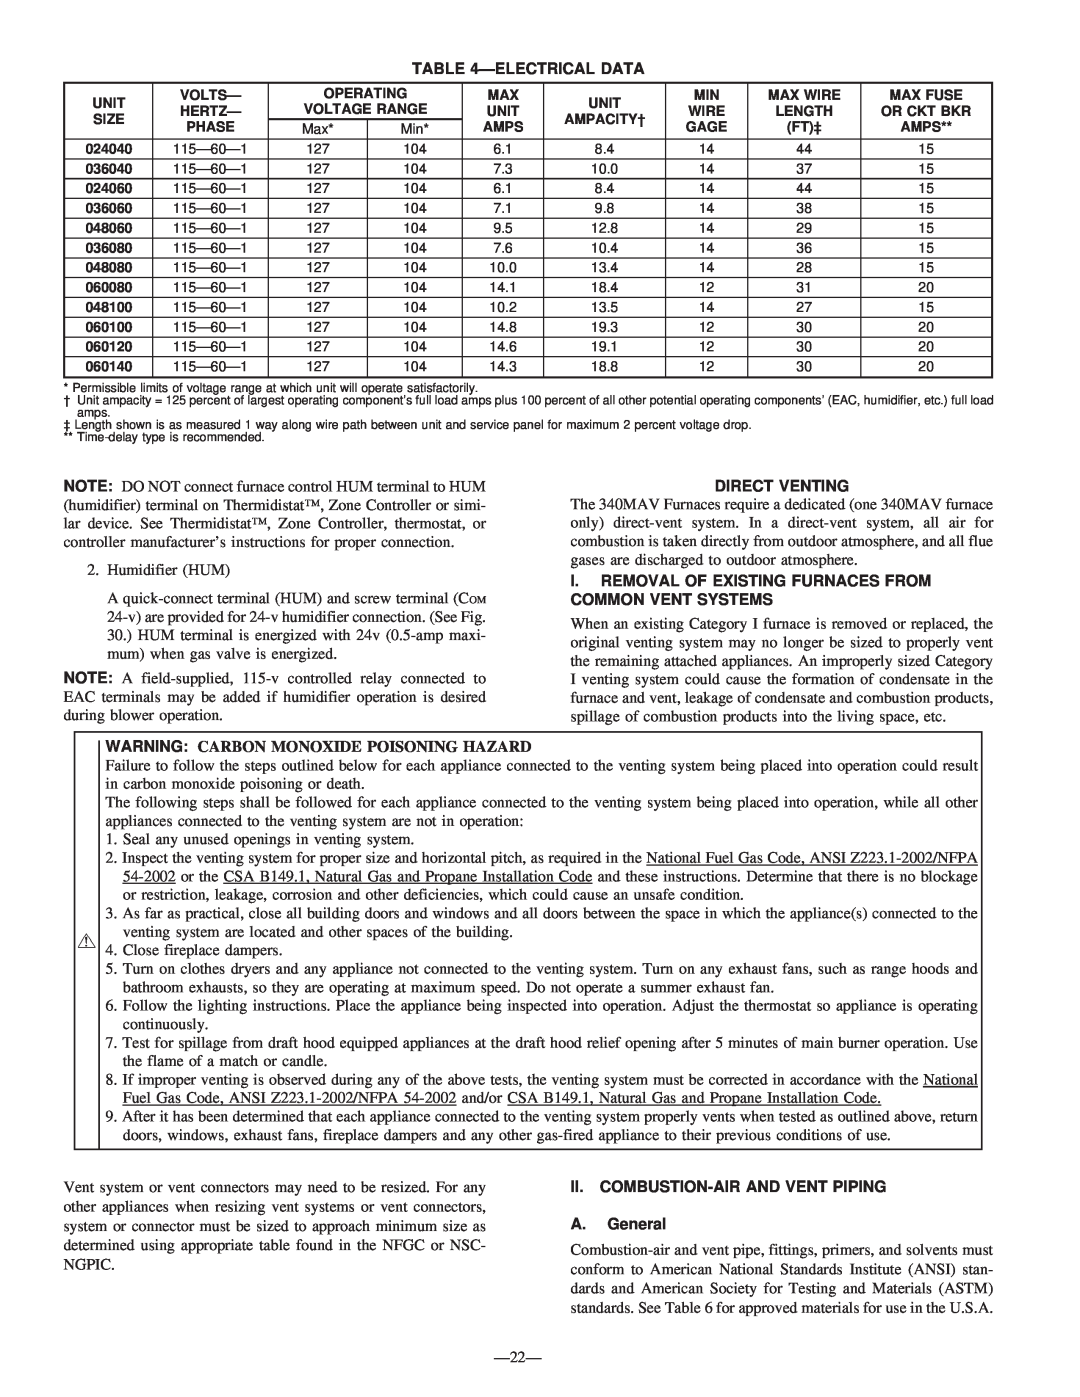 Bryant 340MAV instruction manual Electricaldata, Direct Venting, Warning Carbon Monoxide Poisoning Hazard 